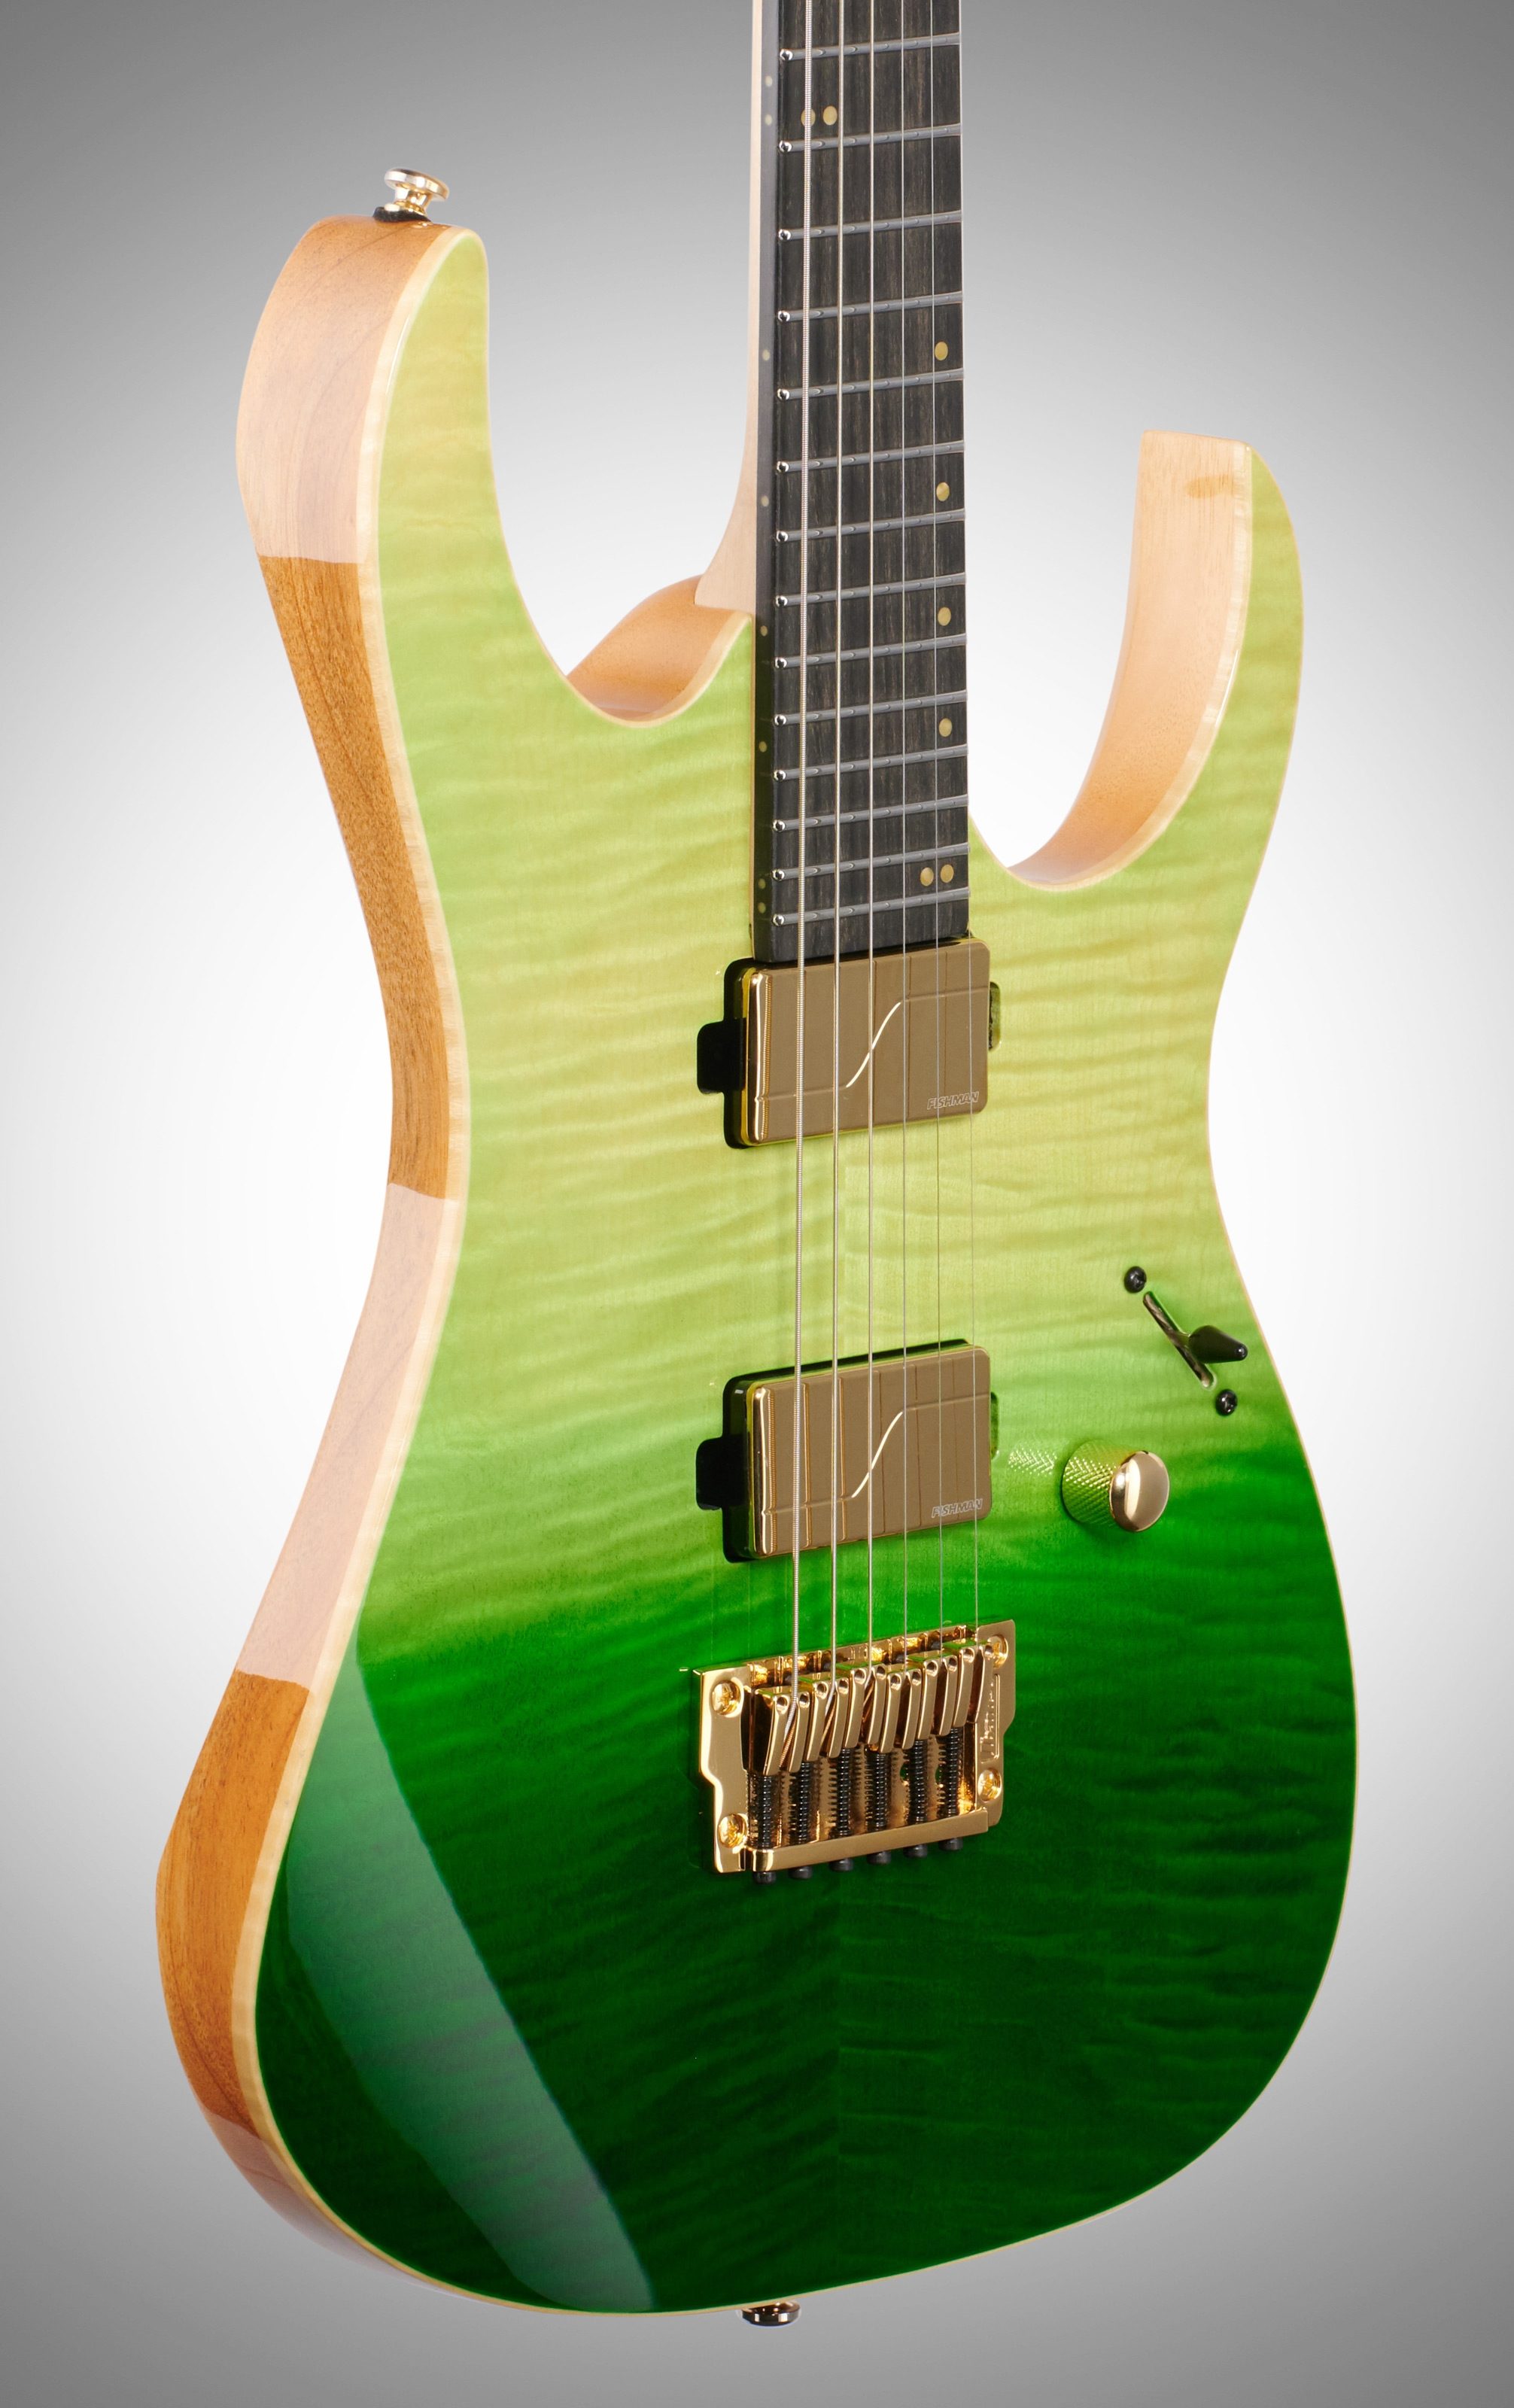 Ibanez Luke Hoskins LHM1 Electric Guitar (with Gig Bag), Transparent Green